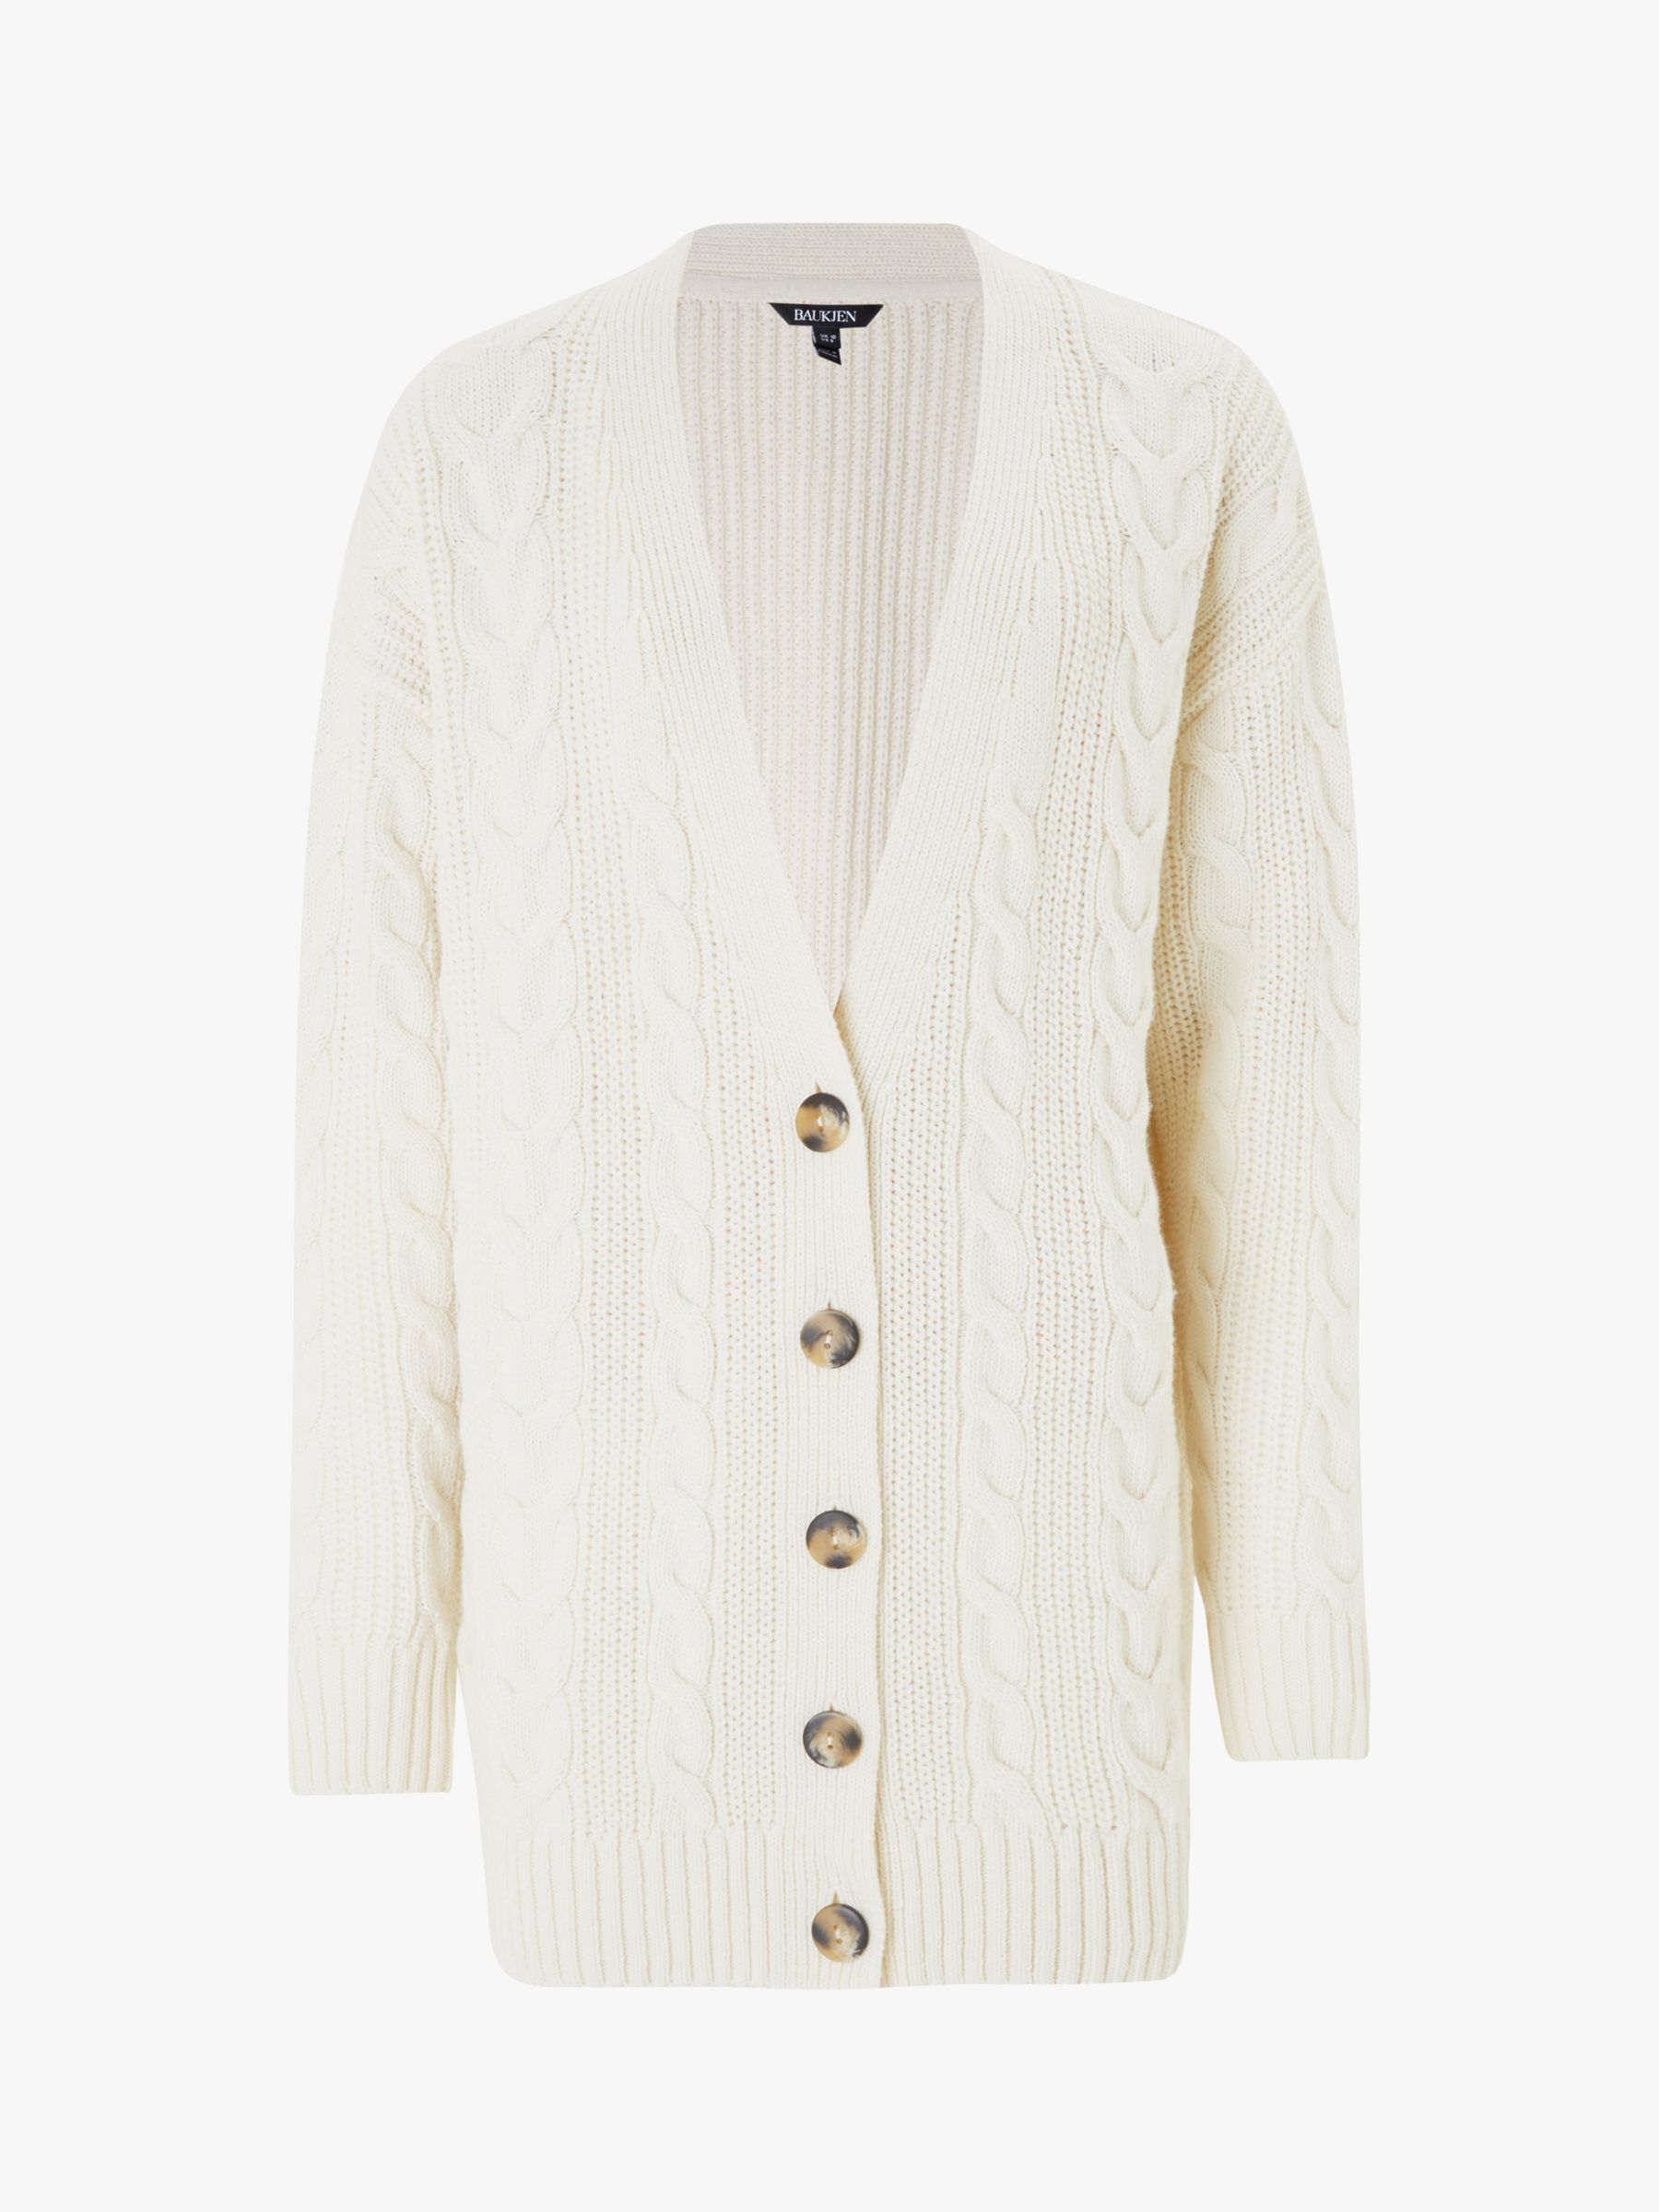 Baukjen Clara Cable Knit Cardigan, Soft White at John Lewis & Partners